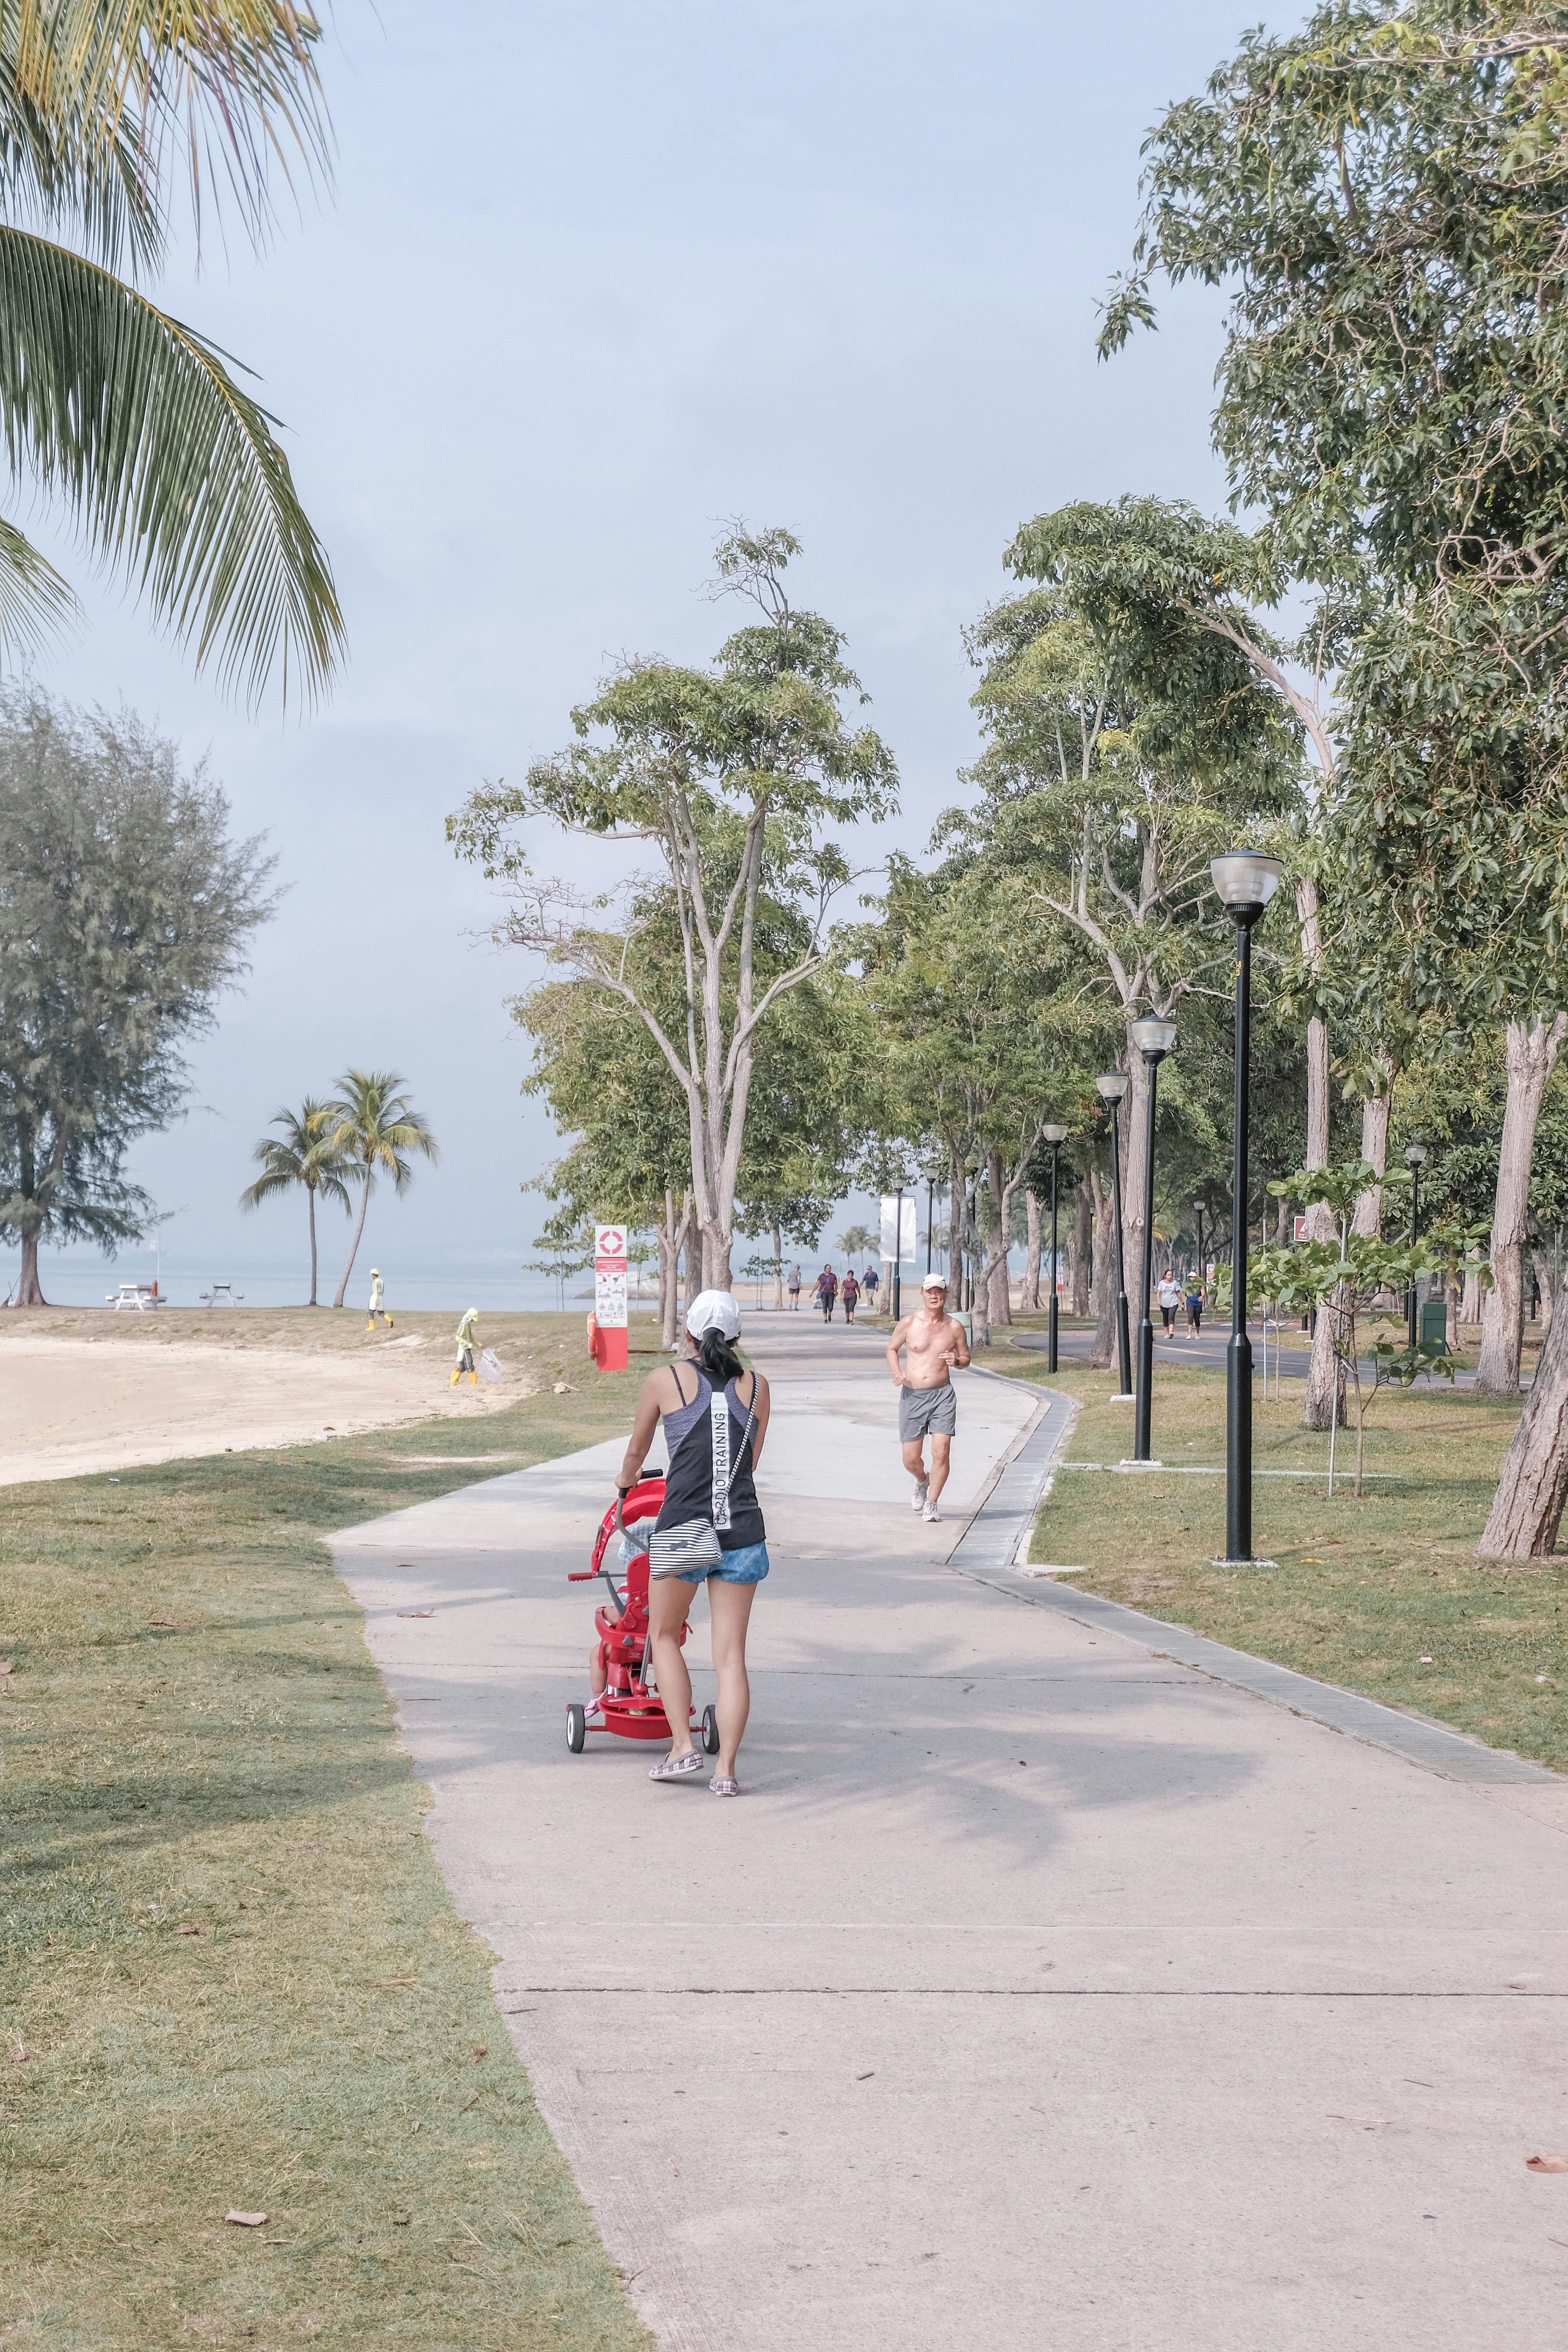 Morning Stroll #Singapore #eastcoast #park #miniature #minimal #softlight #jogging #beach #explore #haze #greenery #walk